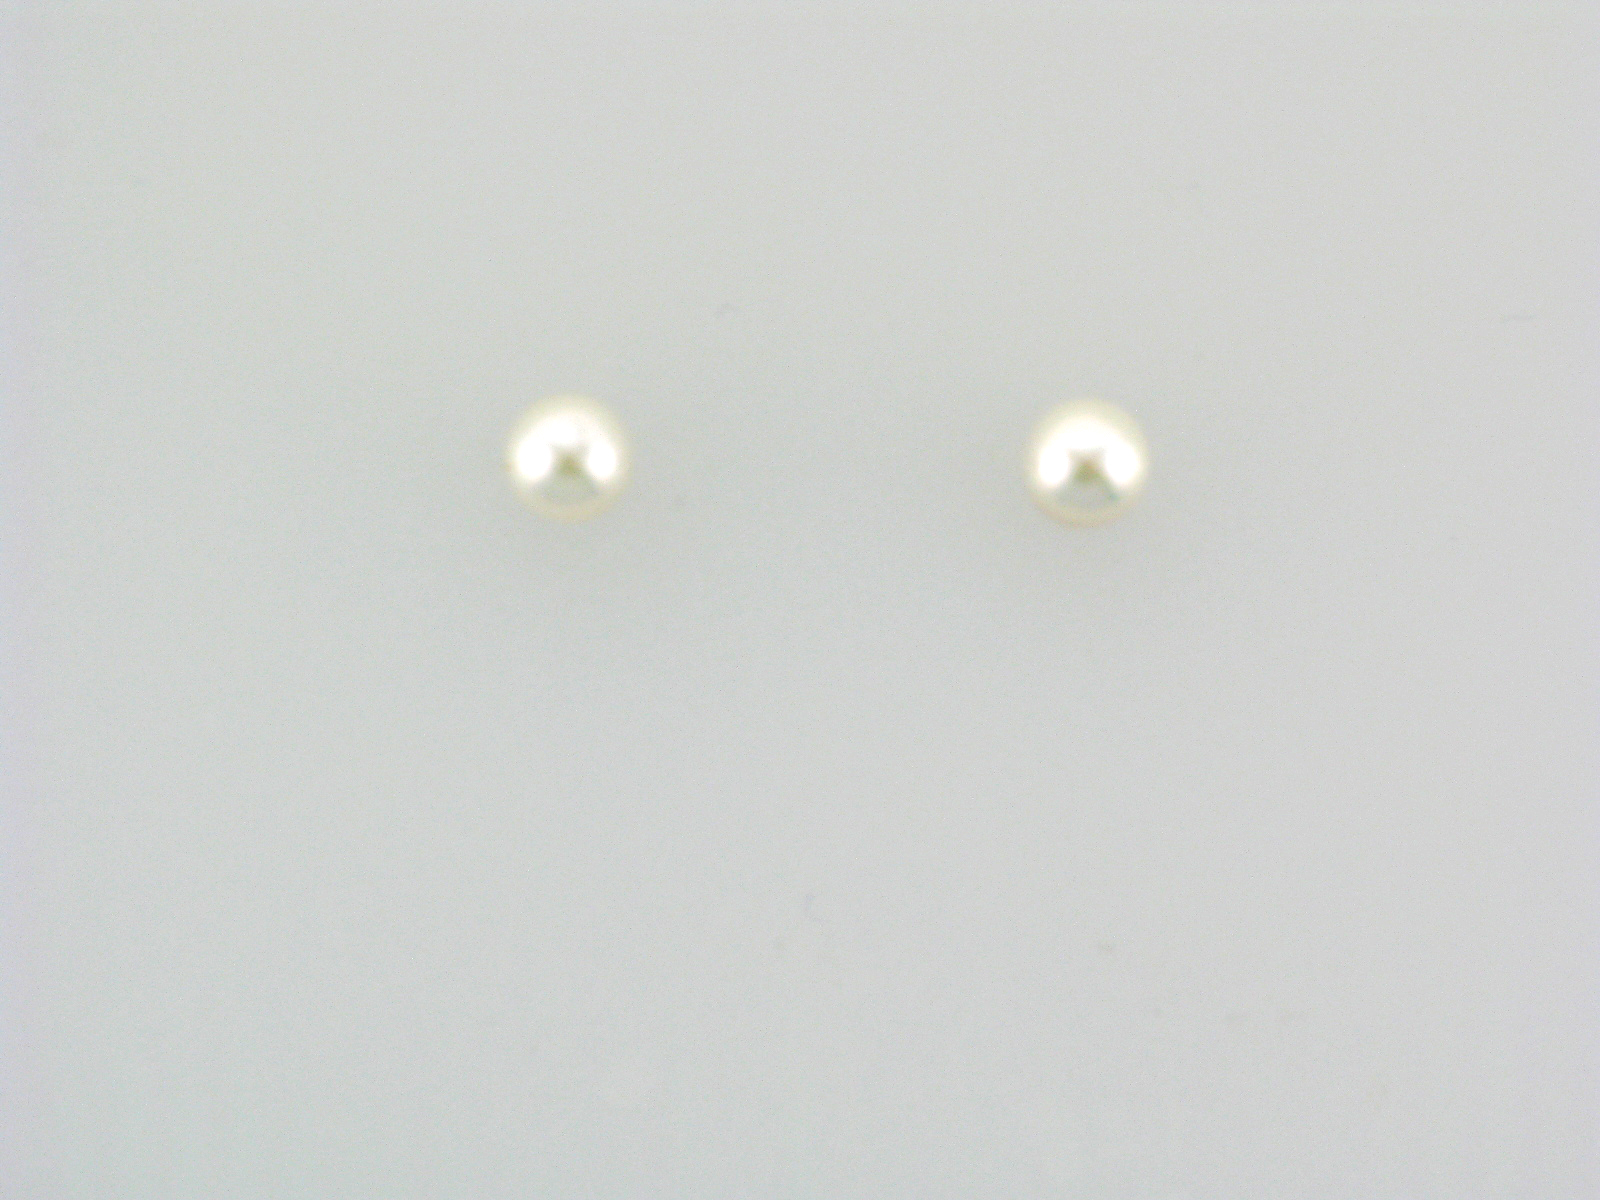 5mm Cultured Pearl Earring